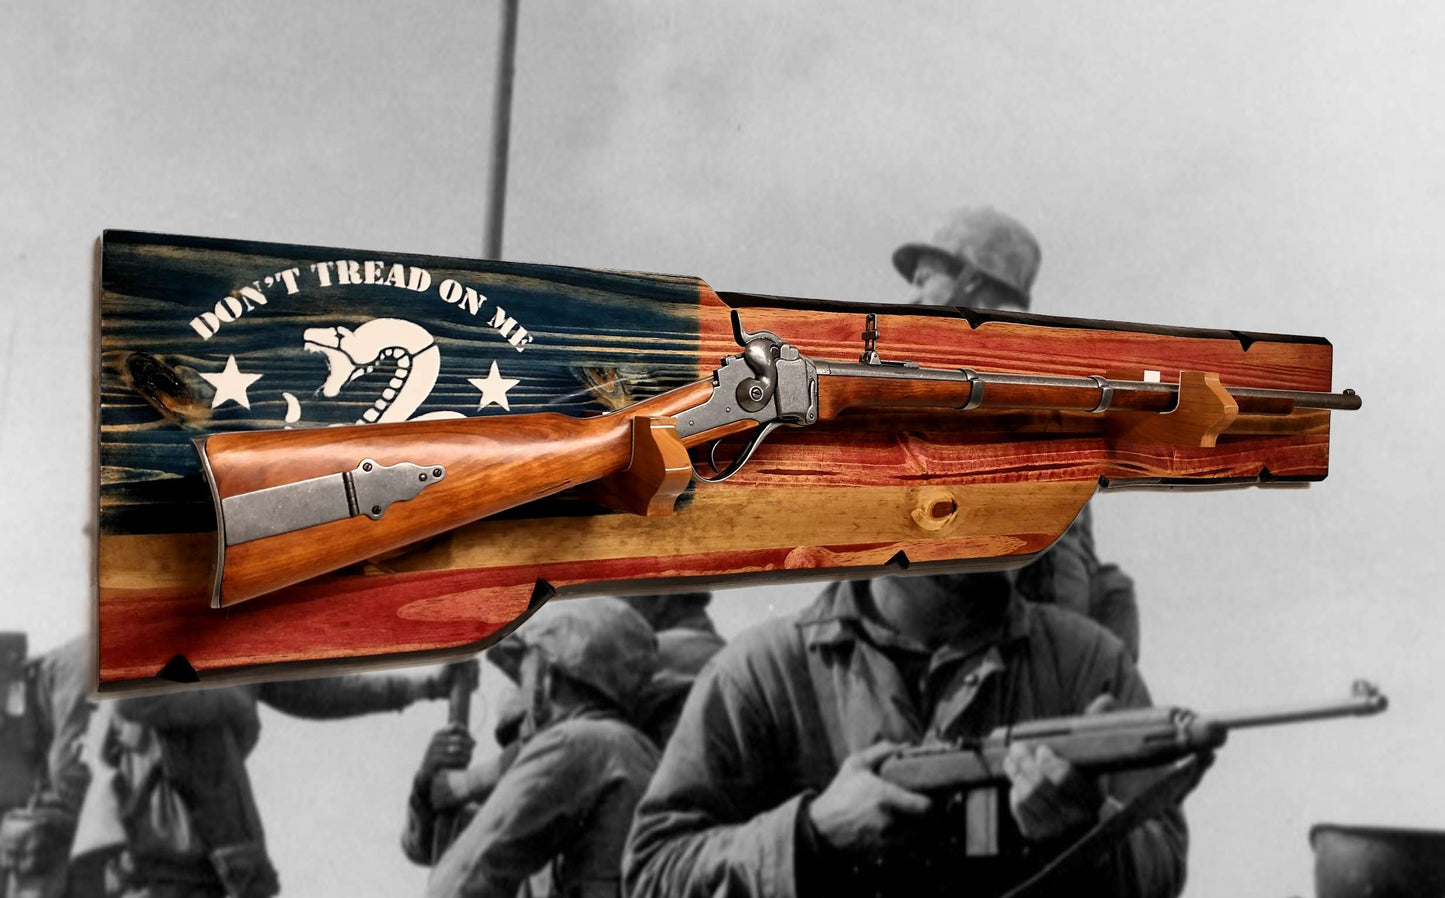 Walker Wood Gifts gun rack Patriotic "Don’t Tread On Me" Gun Wall Display Collectors Gift